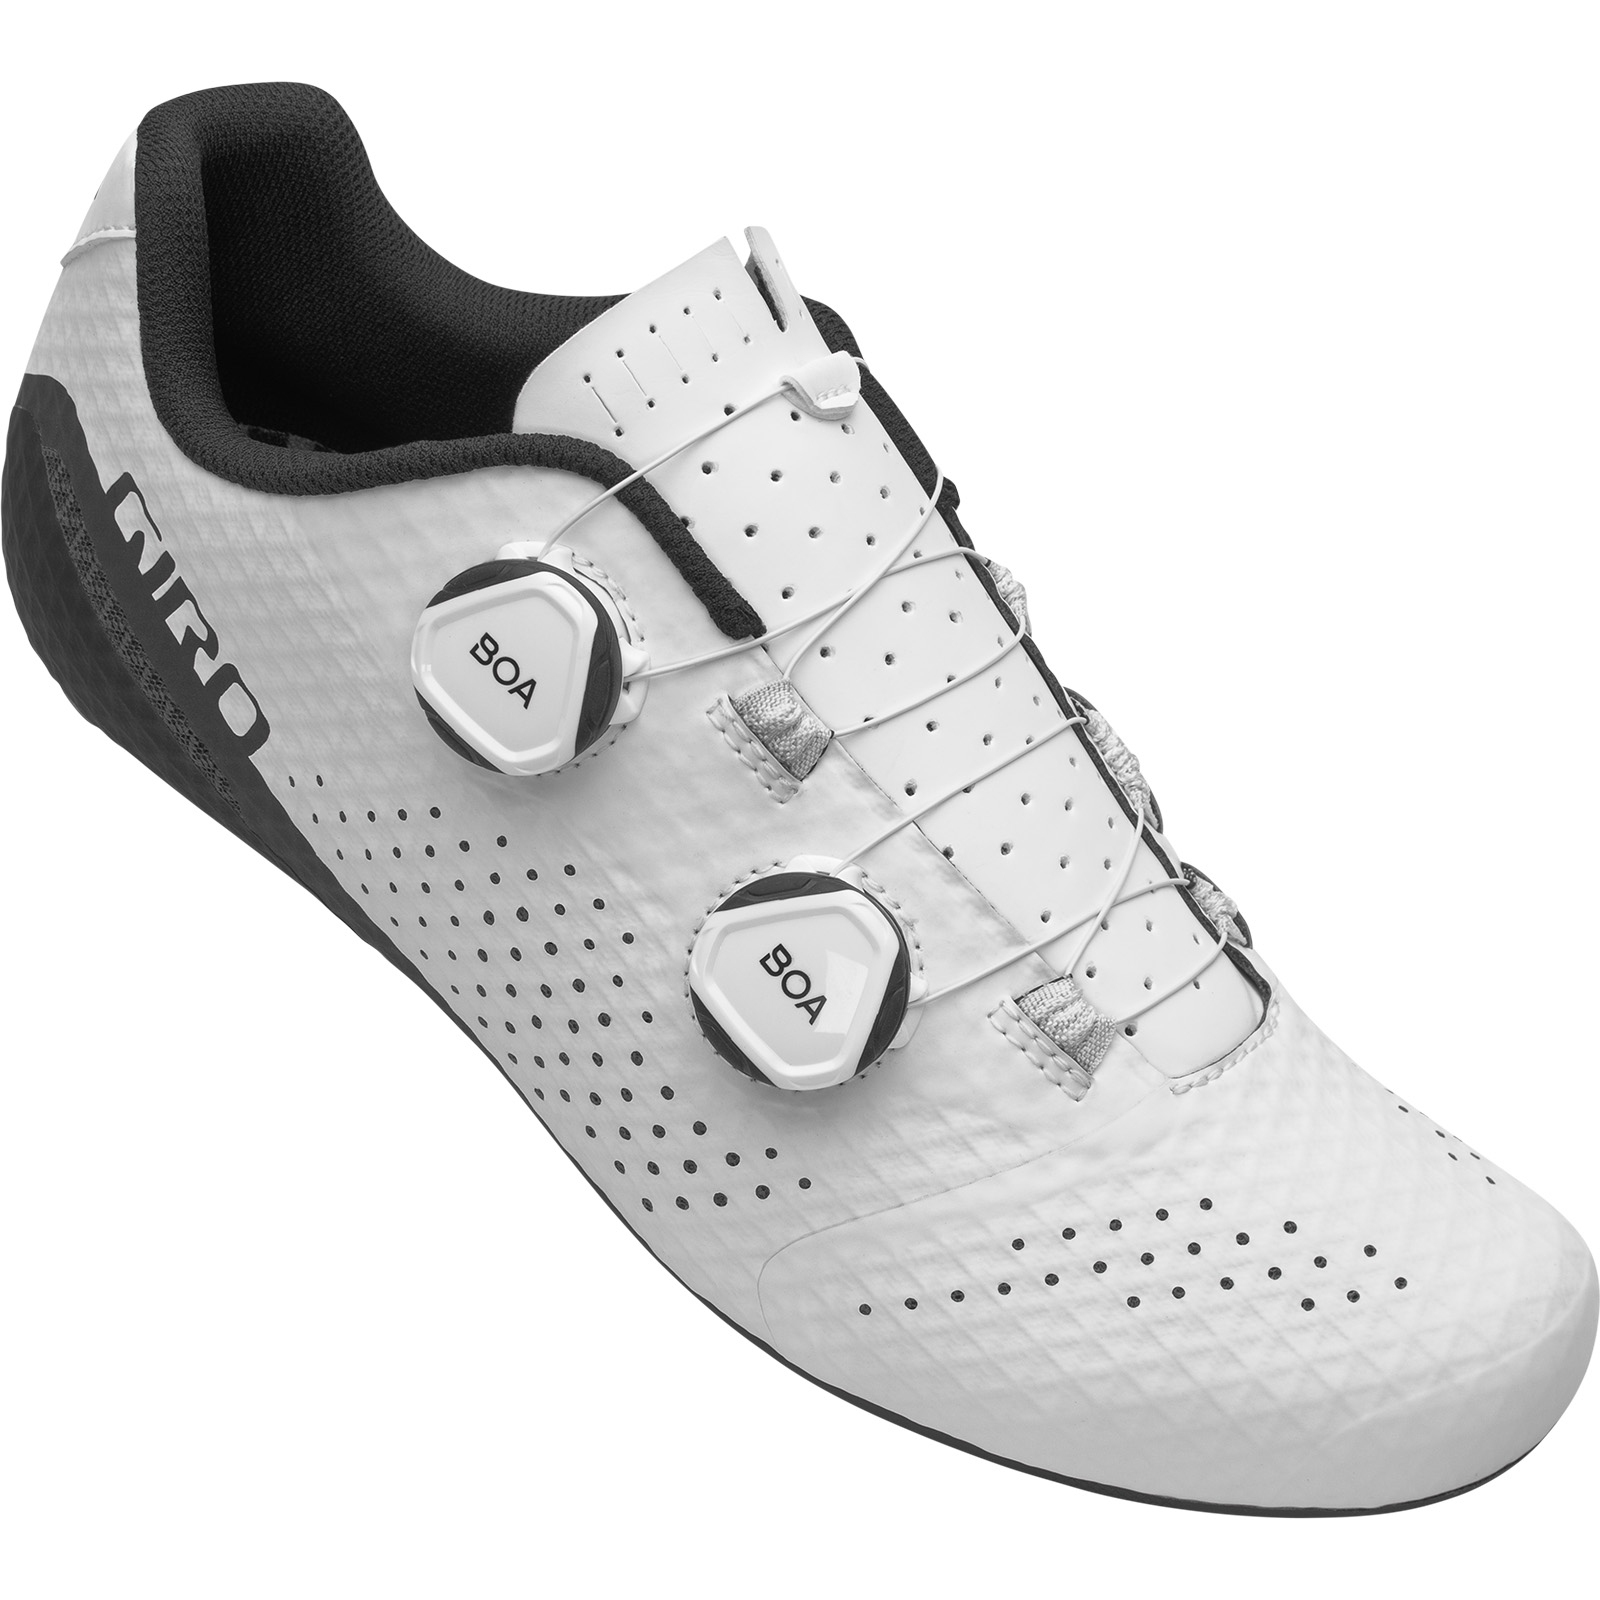 Image of Giro Regime Road Shoes Men - white